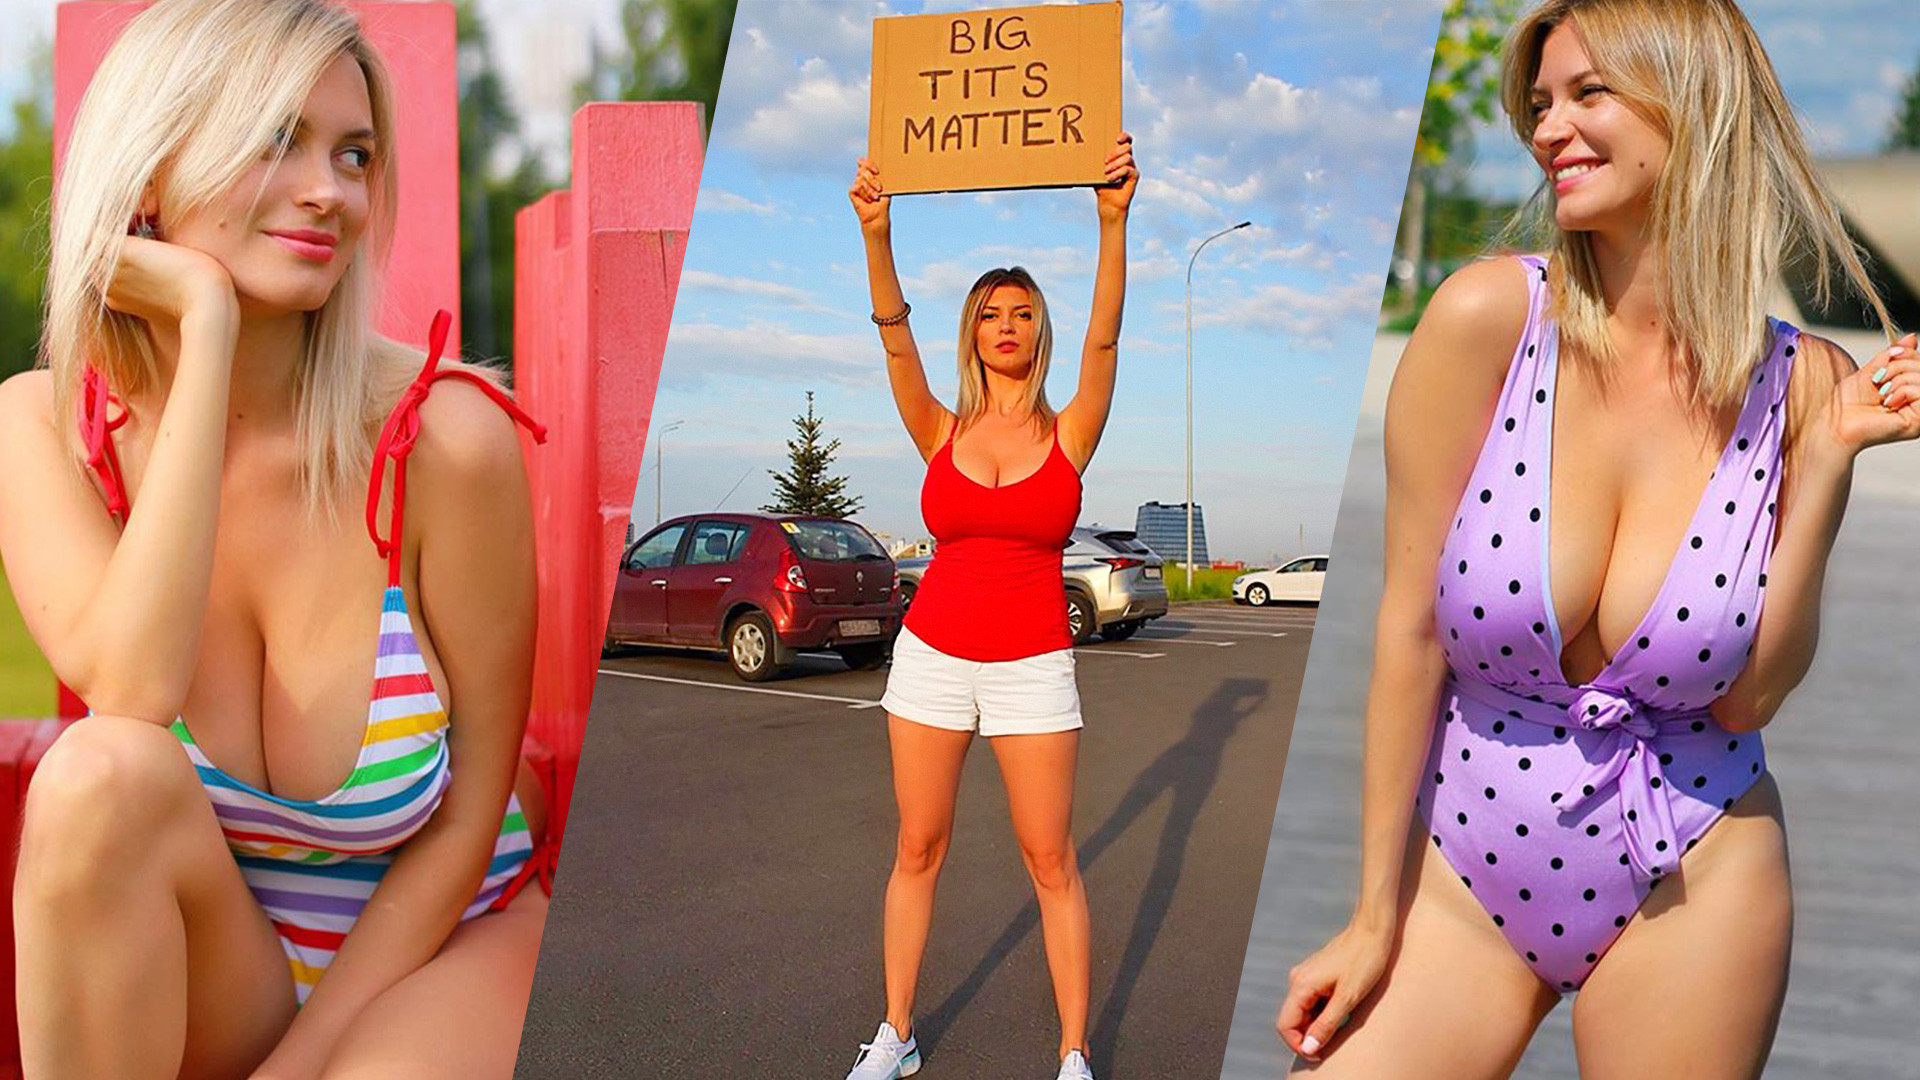 Big tits womenv Meet The Leader Of Big Tits Matter Photos Russia Beyond